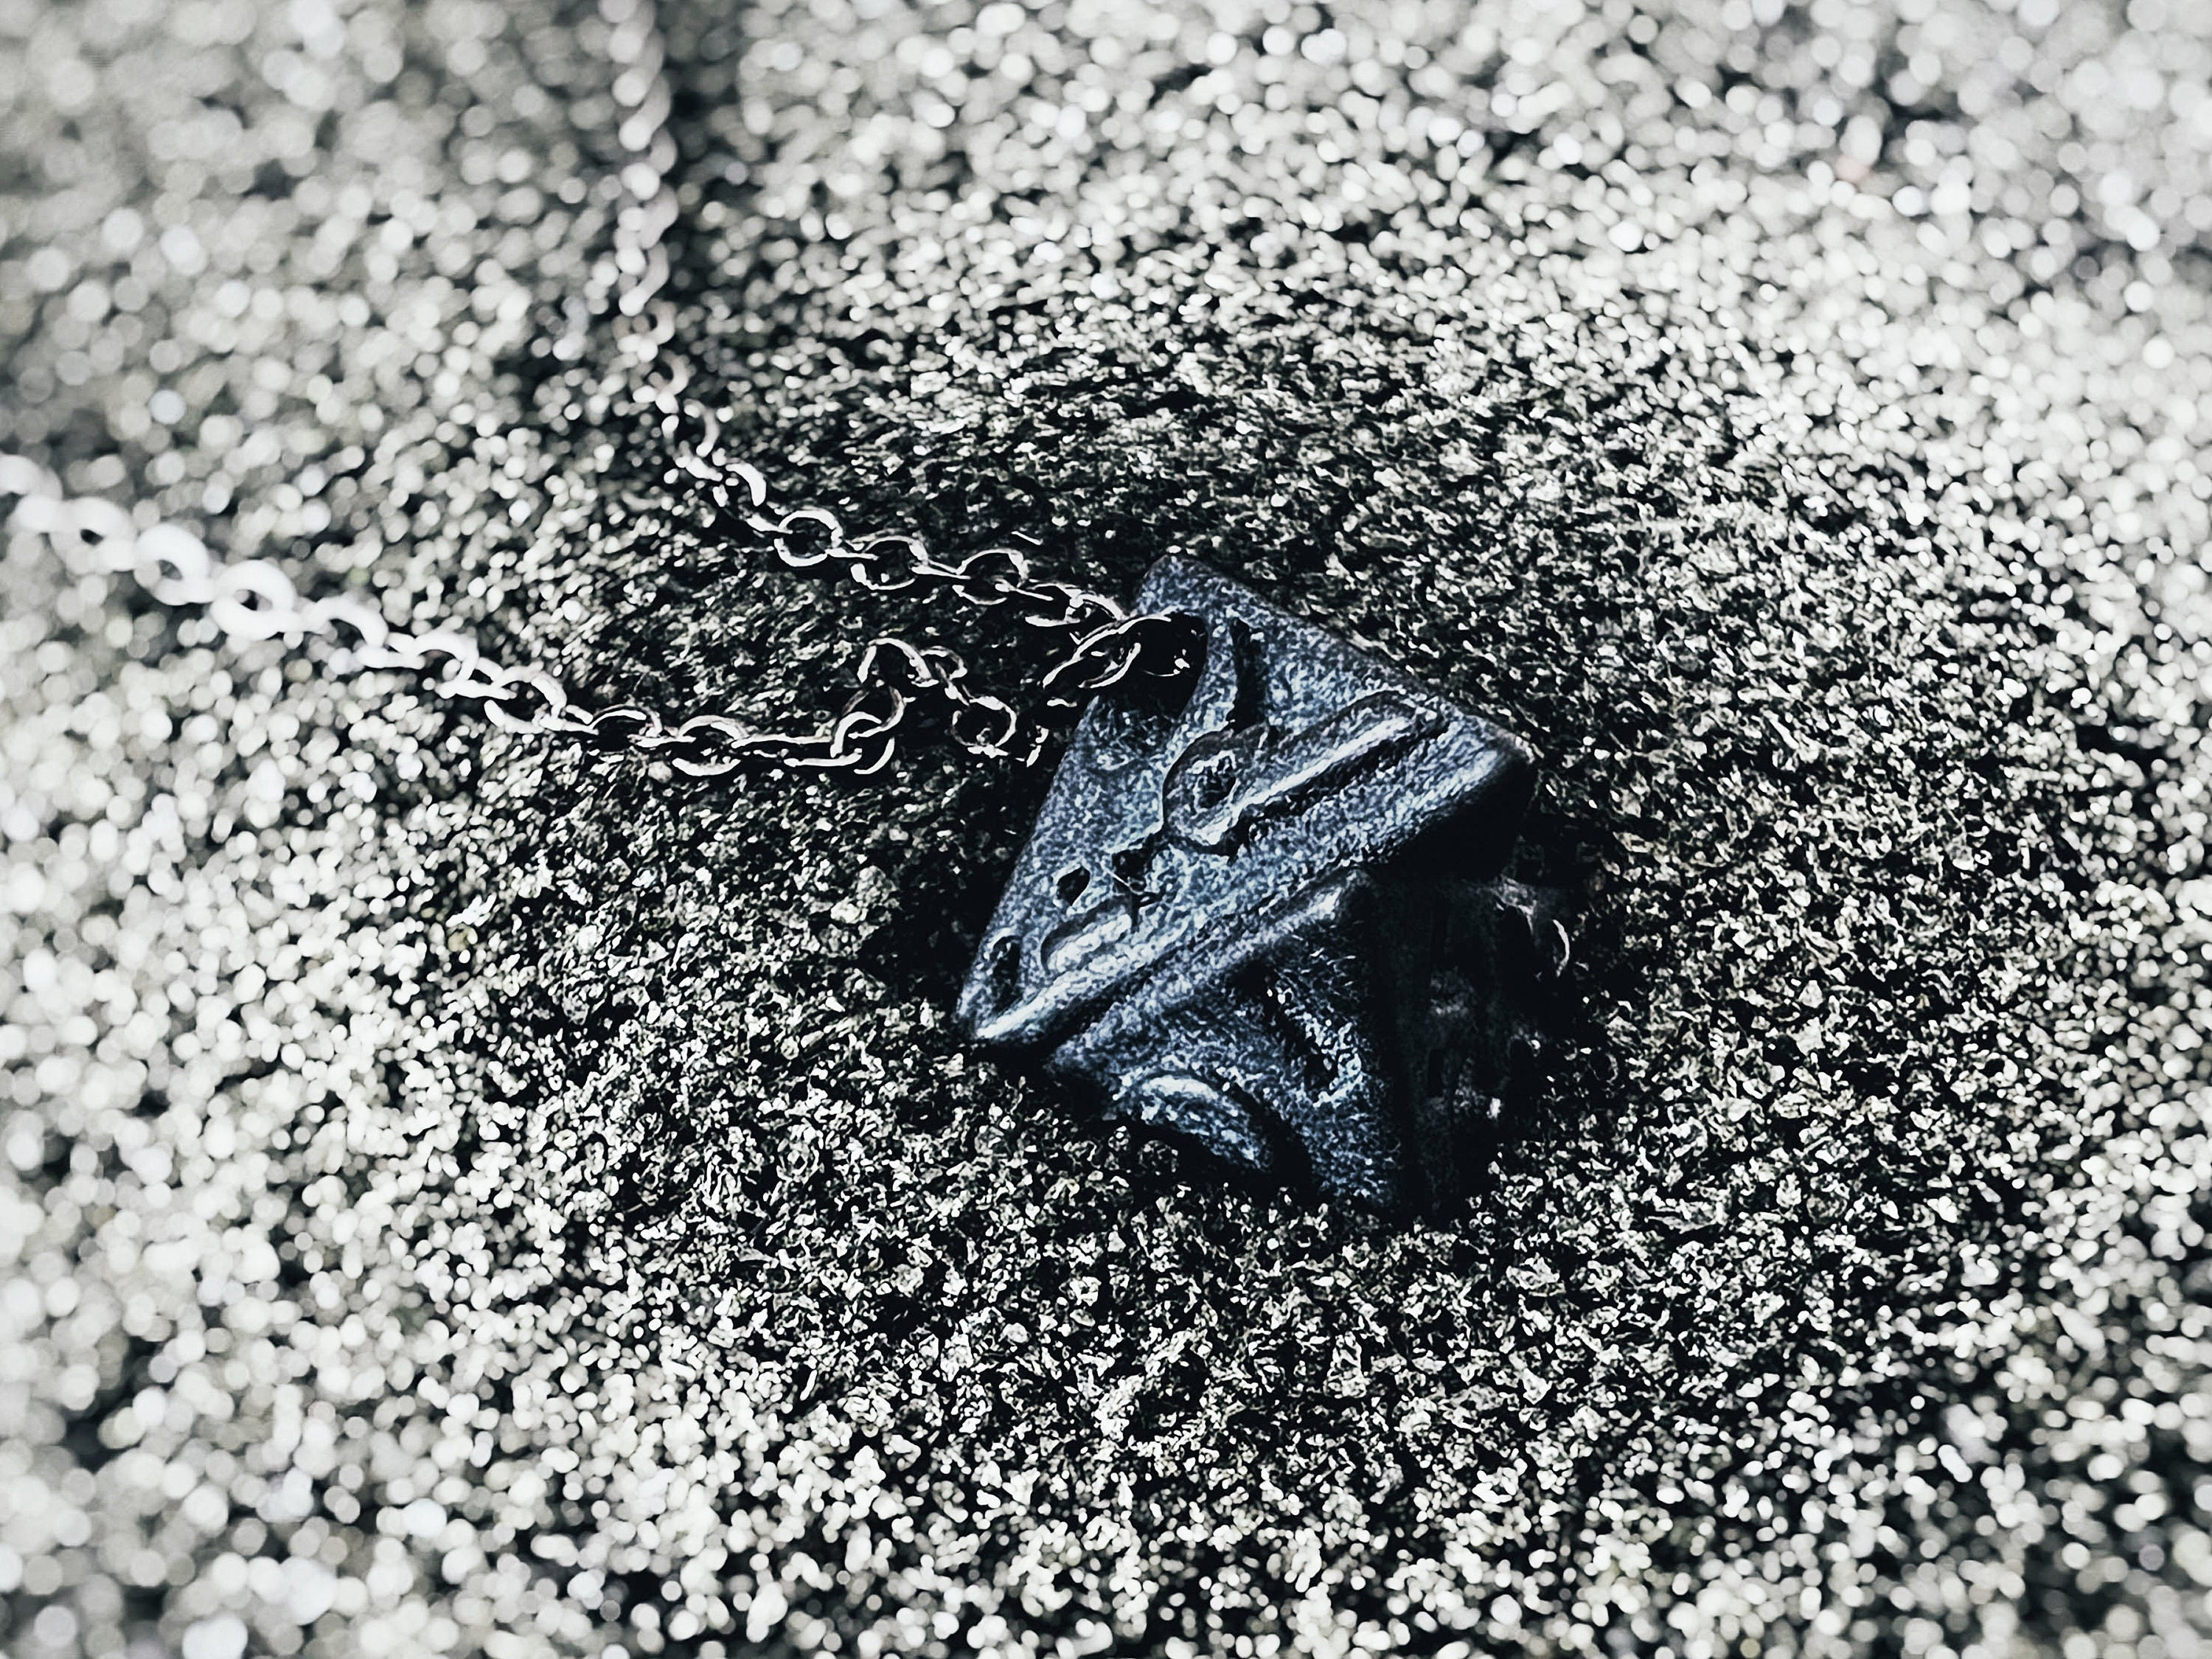 Meteorite Relic Dystopian Pendant - Dune Inspired Cyberpunk Jewelry - Men's/Women's Sci-fi Minimalist Necklace